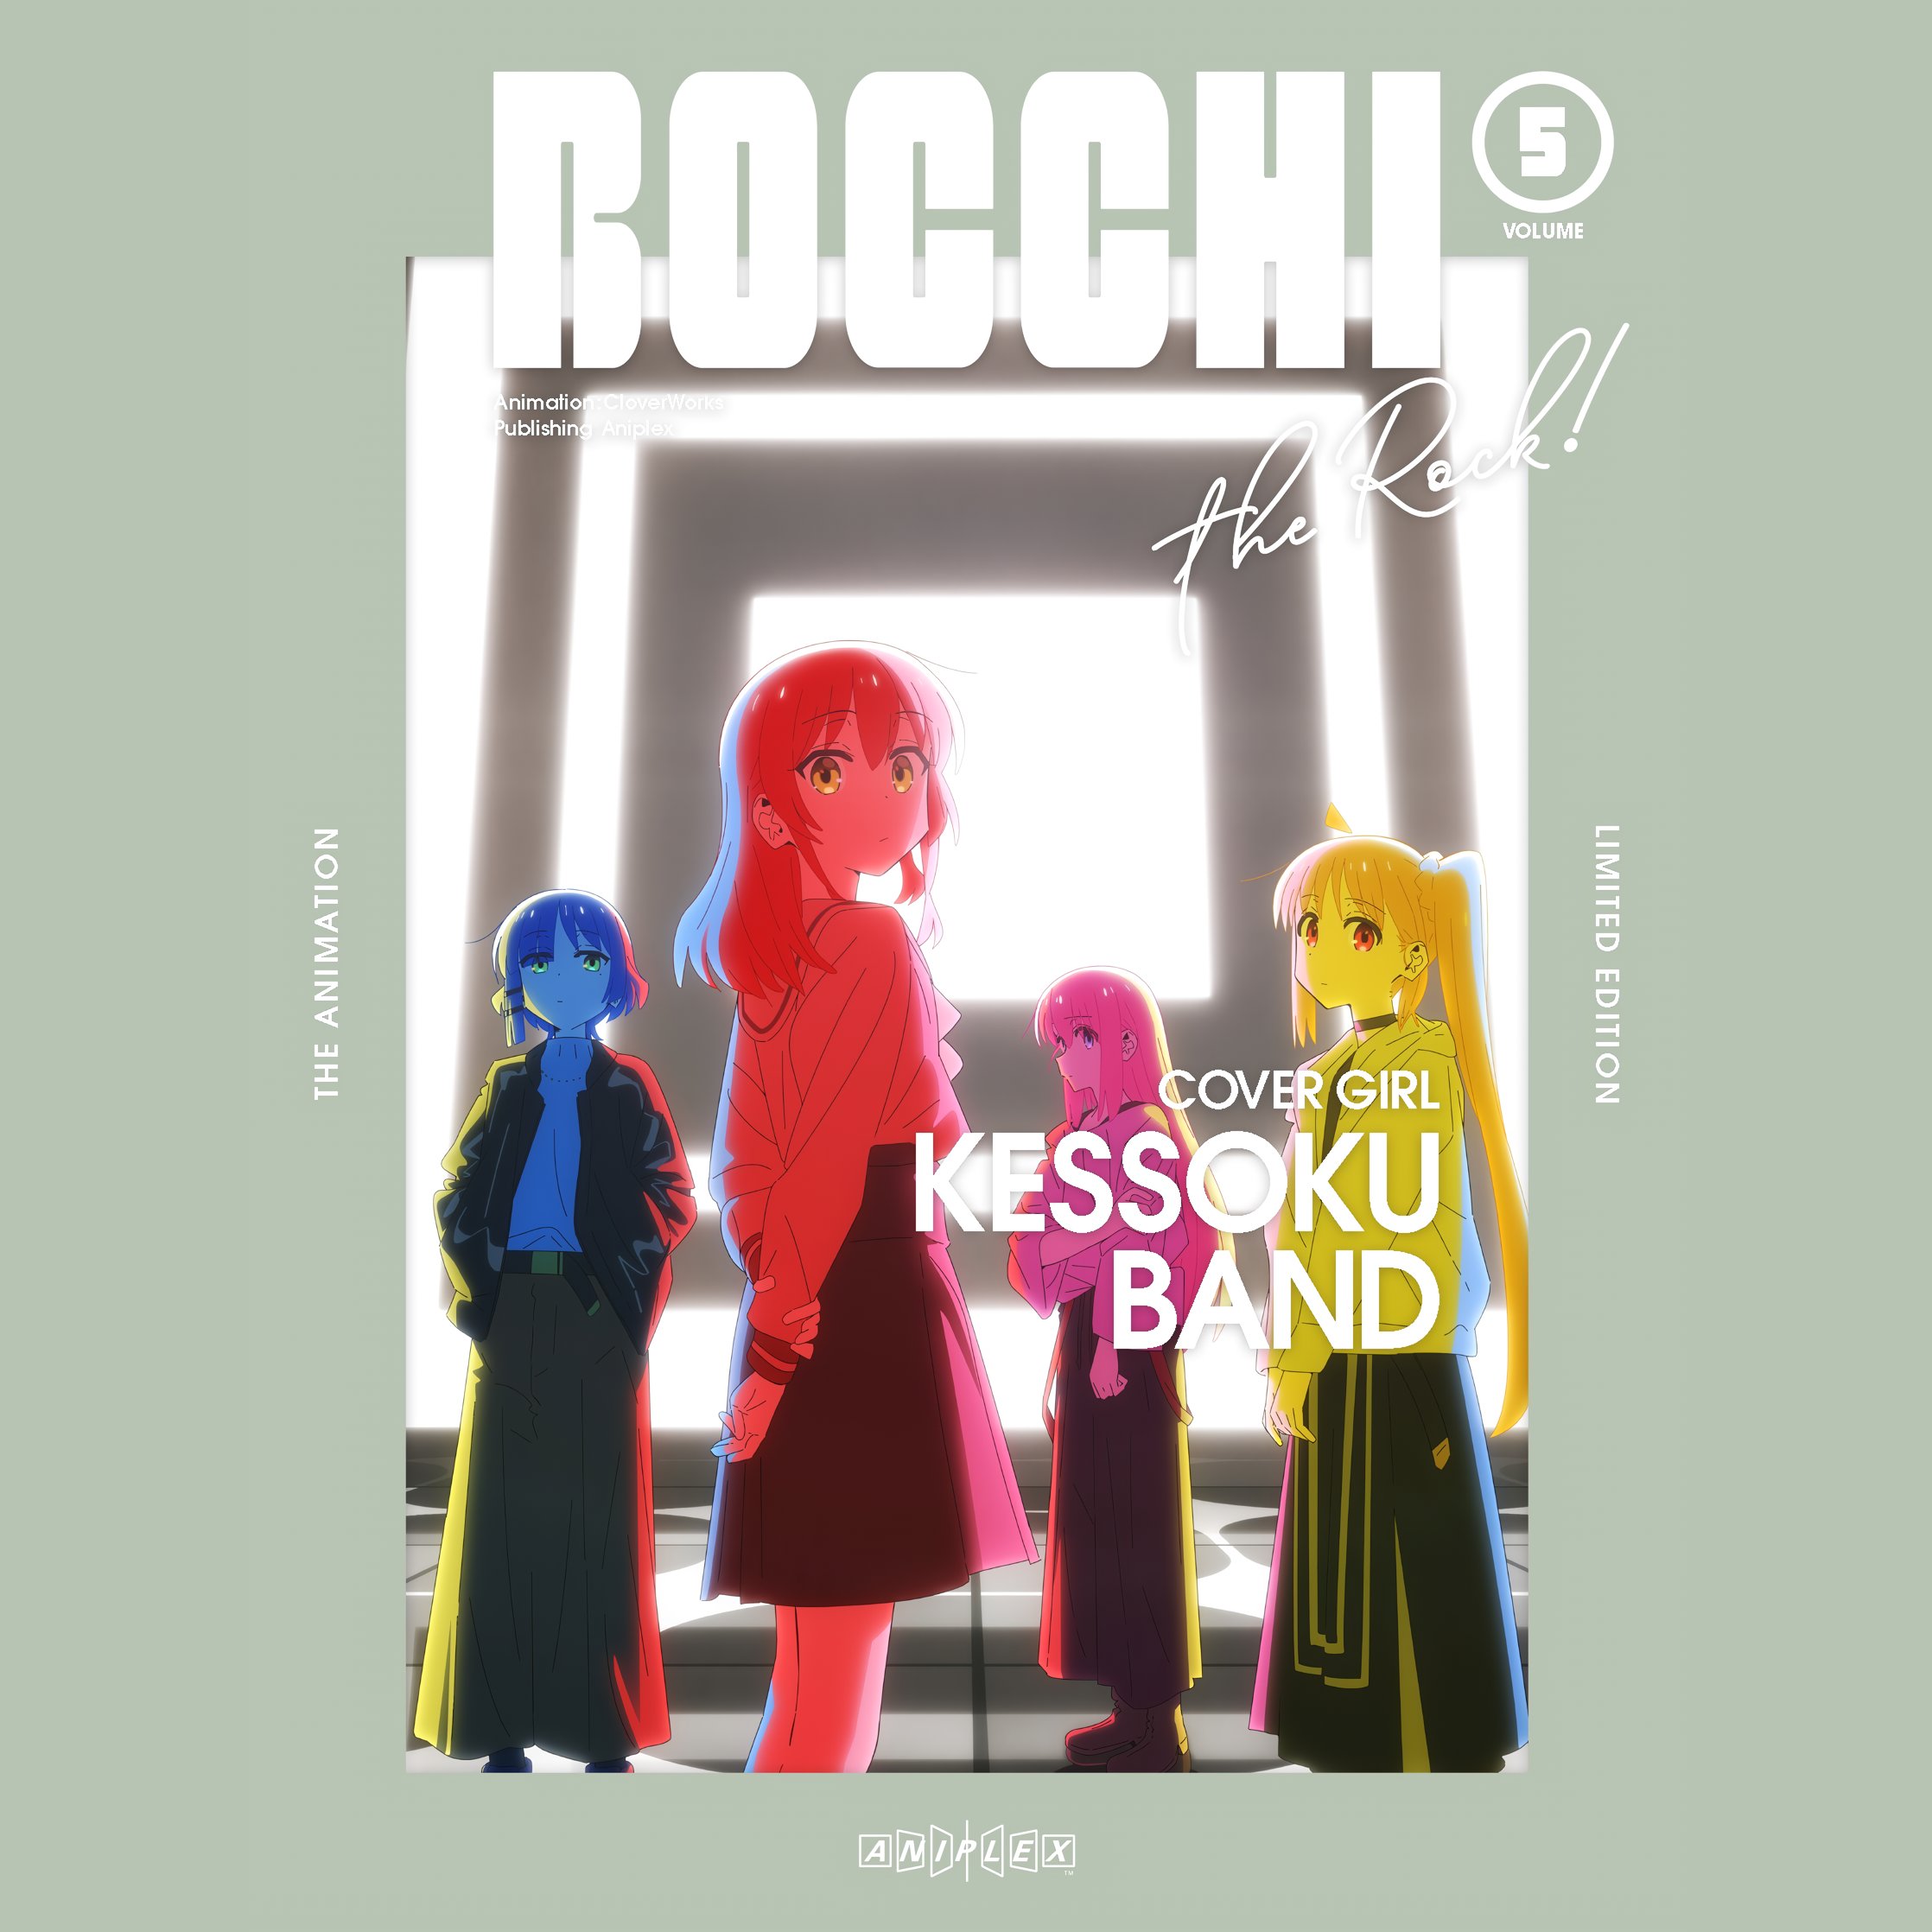 Kessoku Band (album), Bocchi the Rock! Wiki